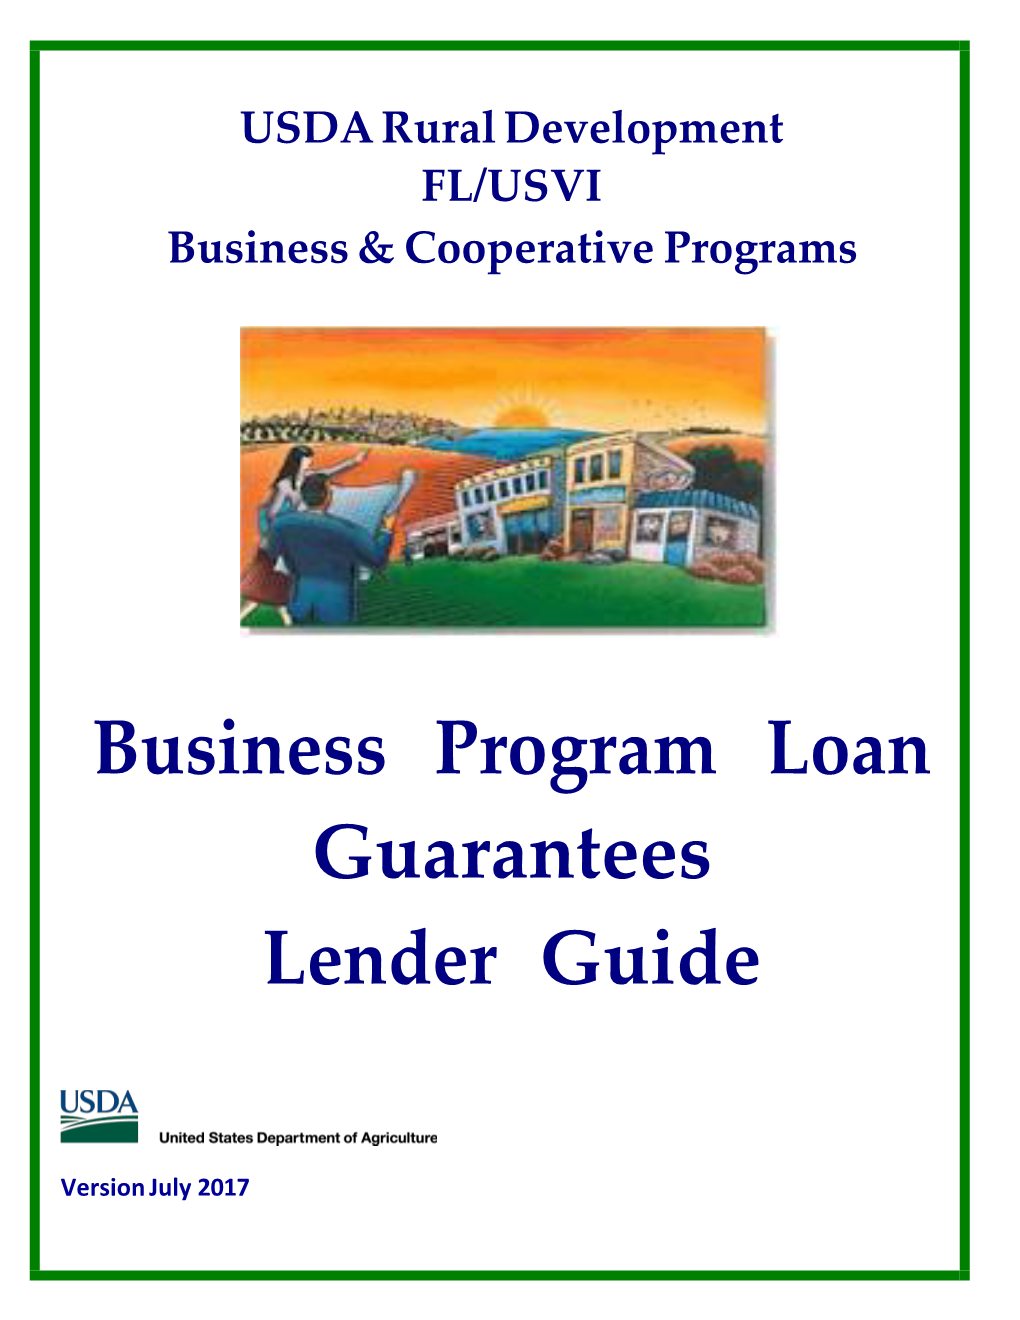 Business Program Loan Guarantees Lender Guide